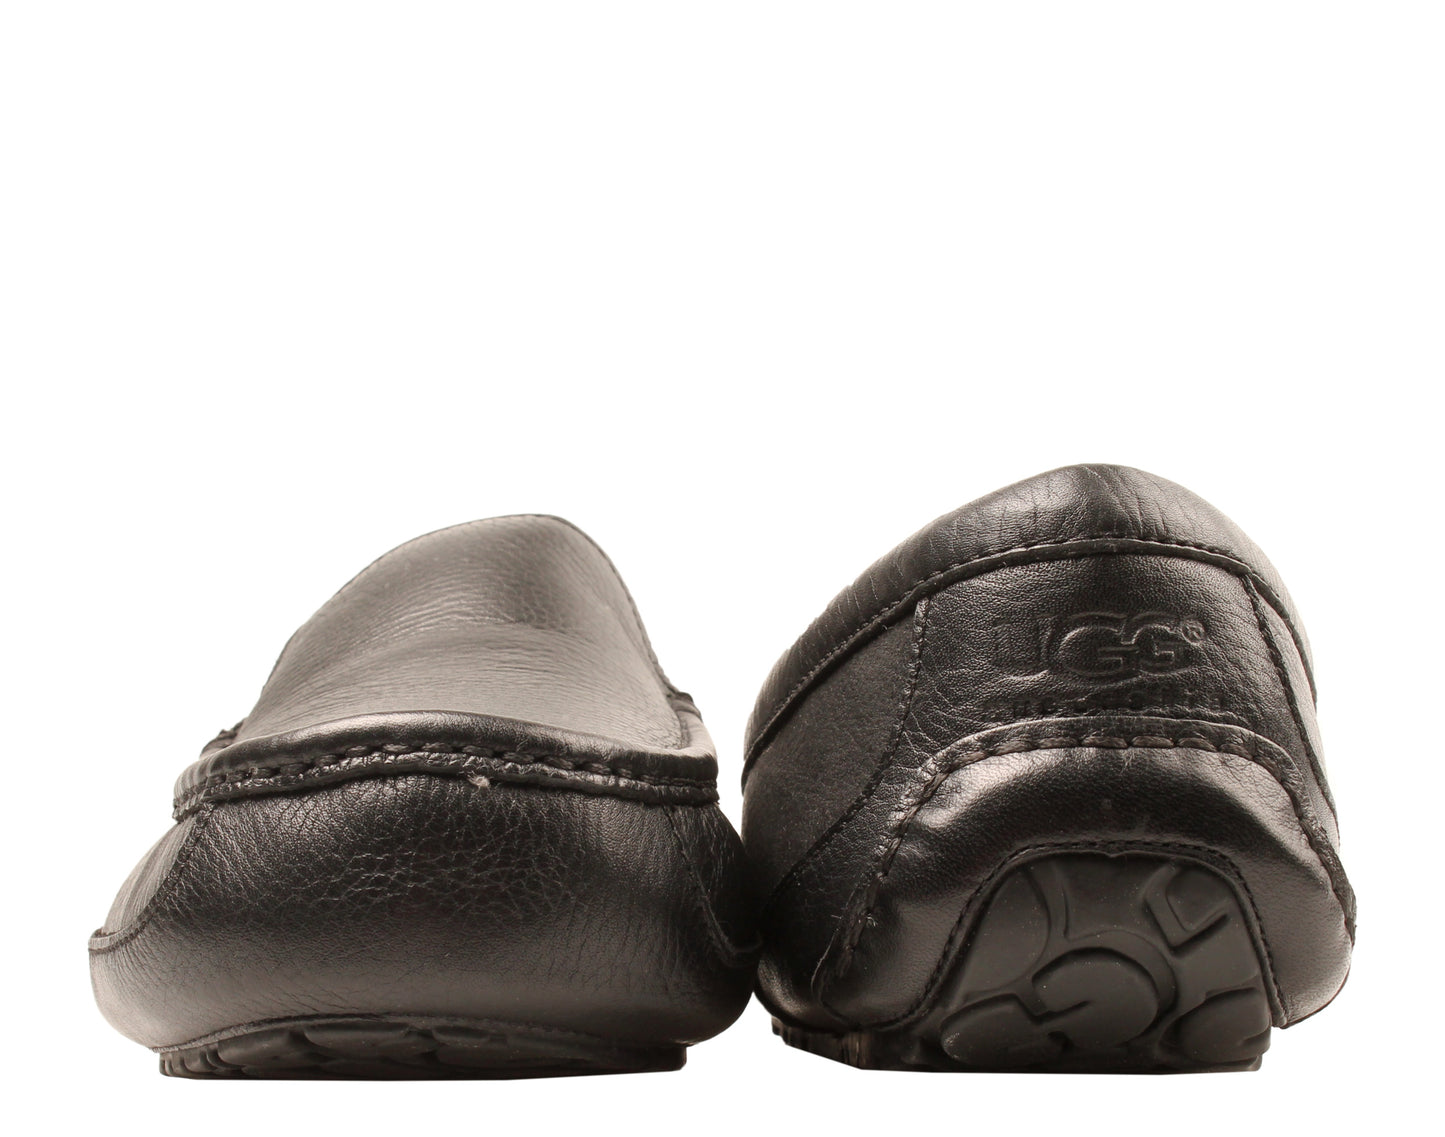 UGG Australia Ascot Leather Moccasin Men's Slippers